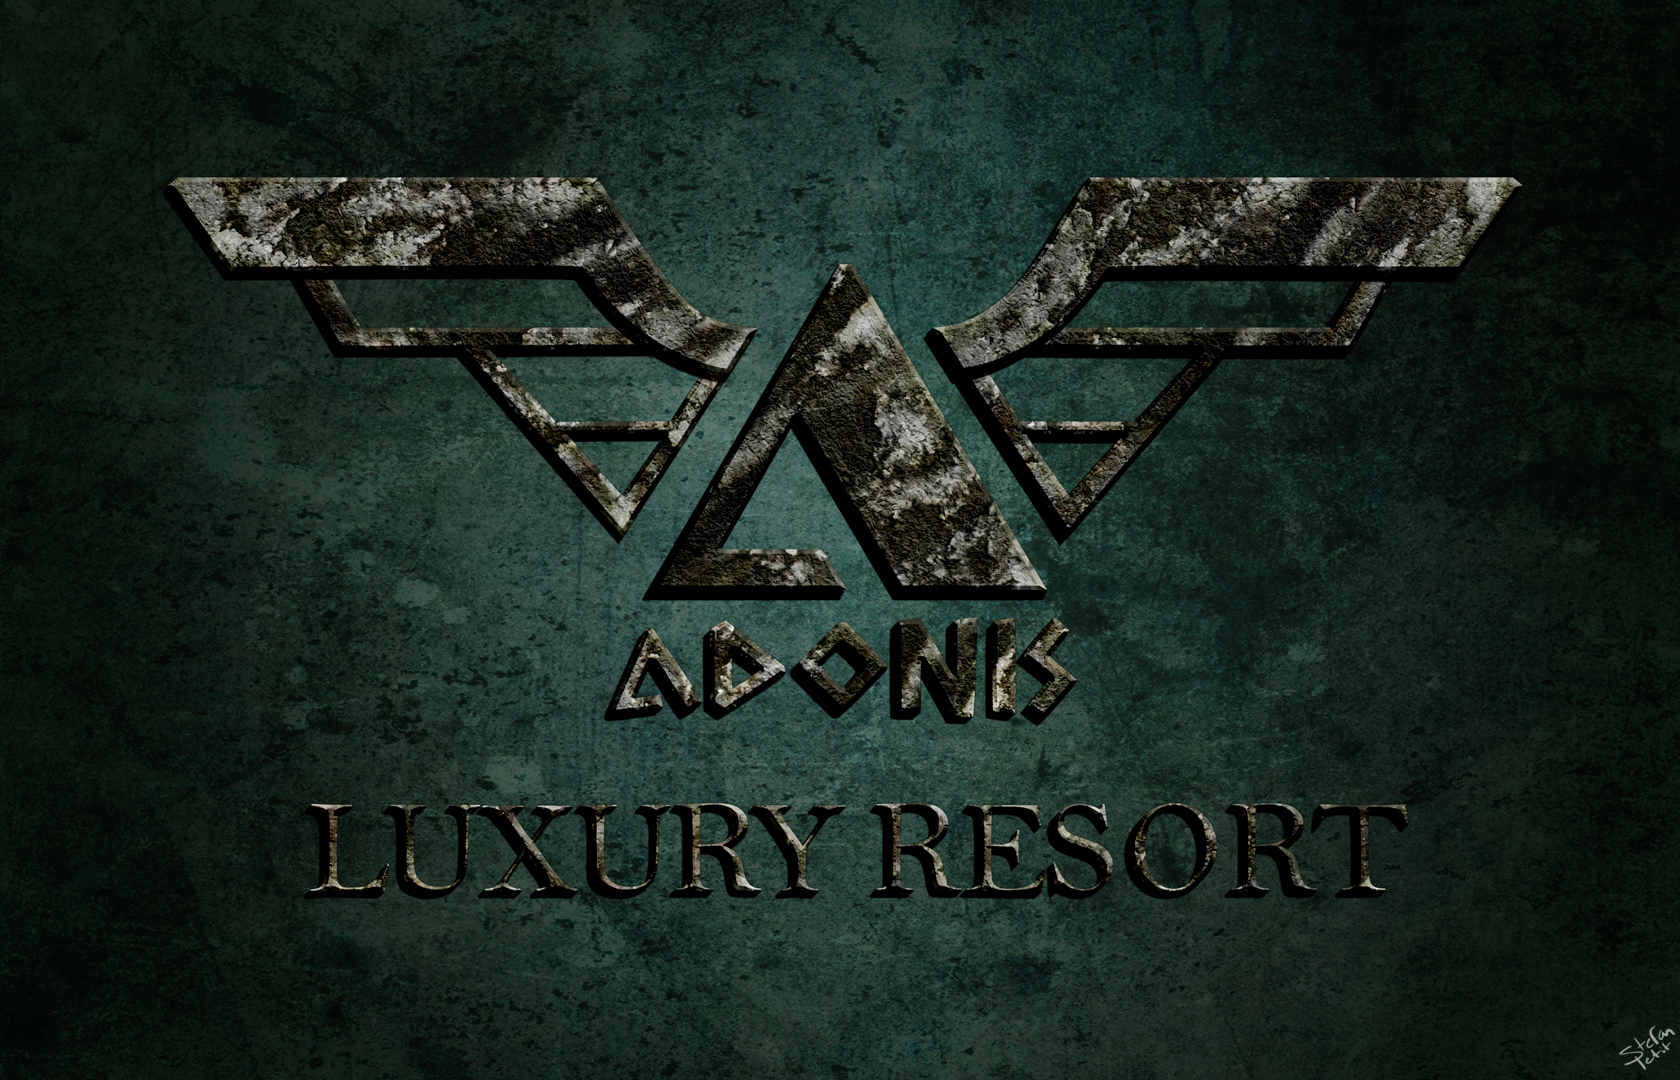 Adonis Luxury Resort By Spetit05